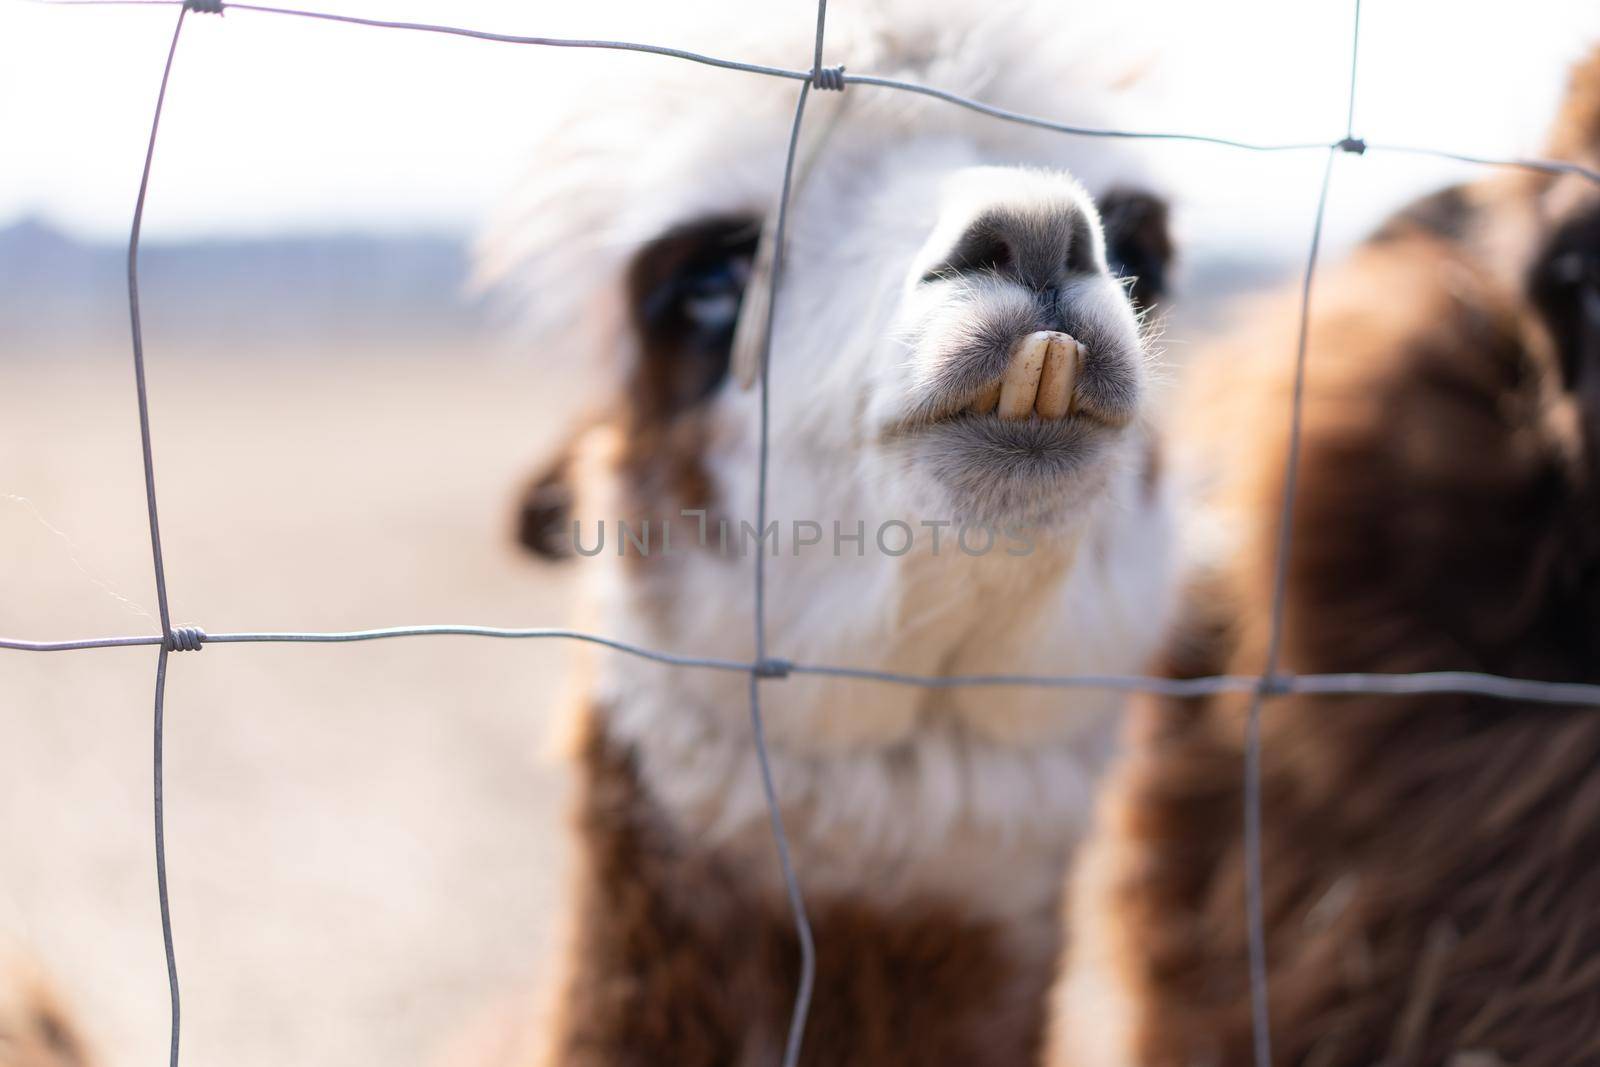 Cute animal alpaka lama on farm outdoors With funny teeth